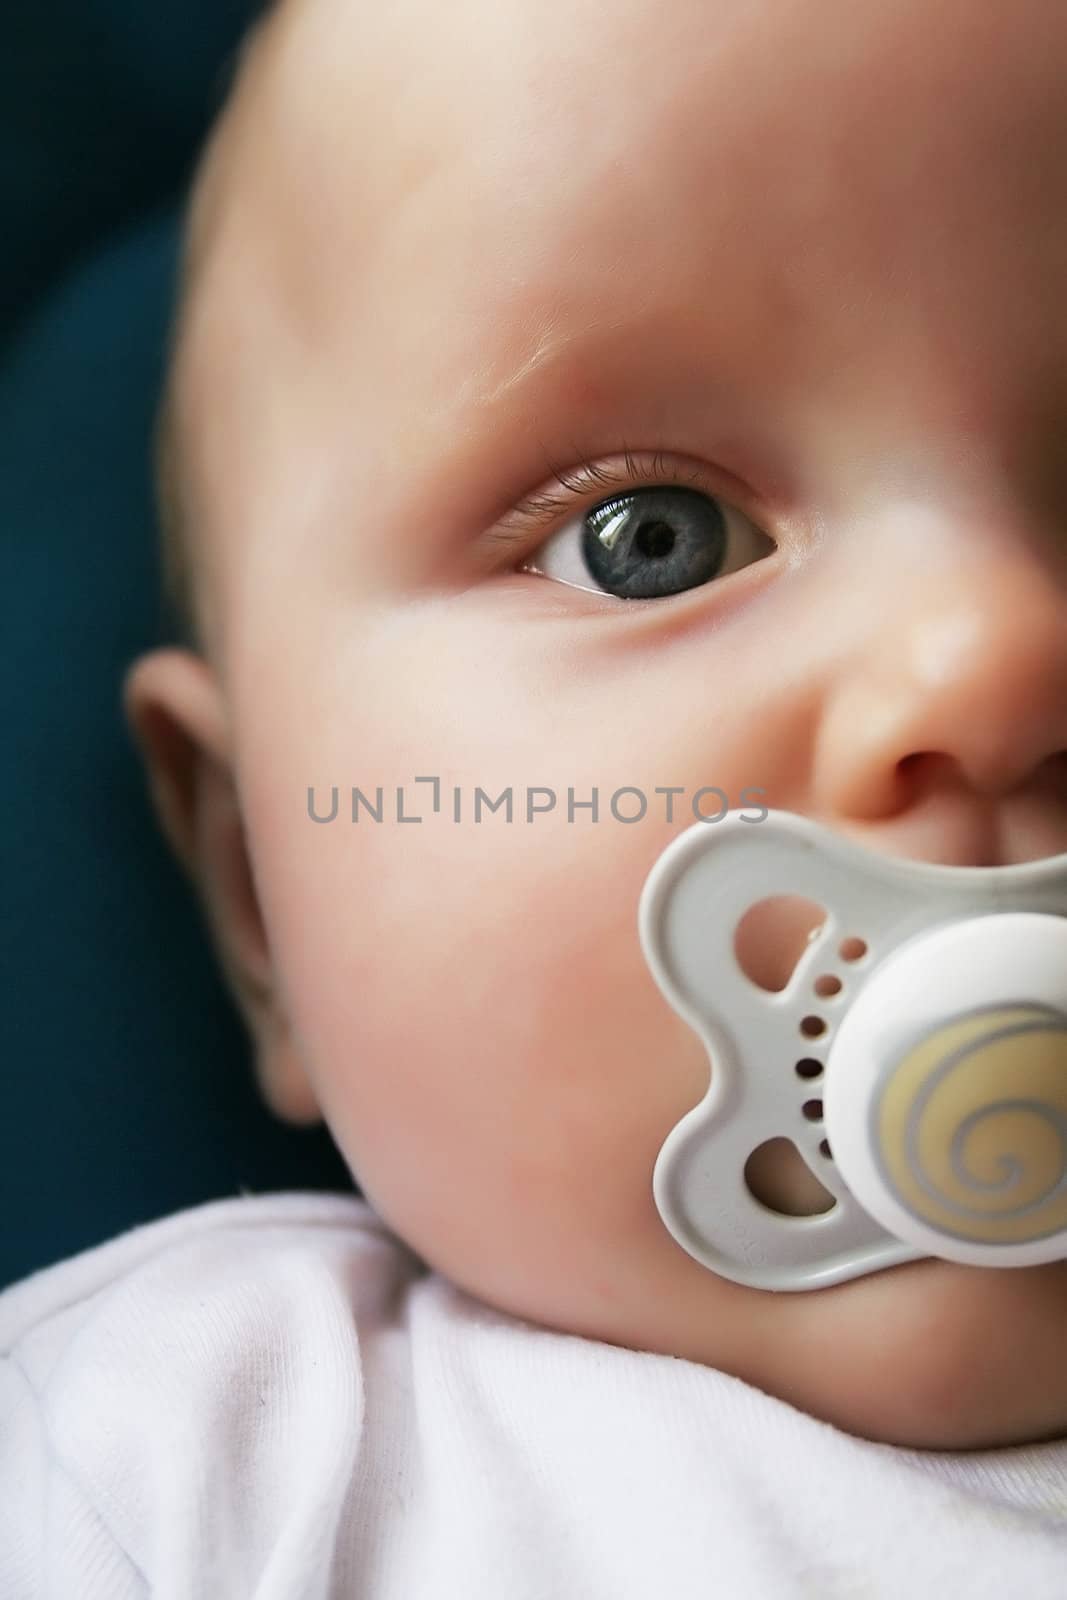 little baby by Hasenonkel